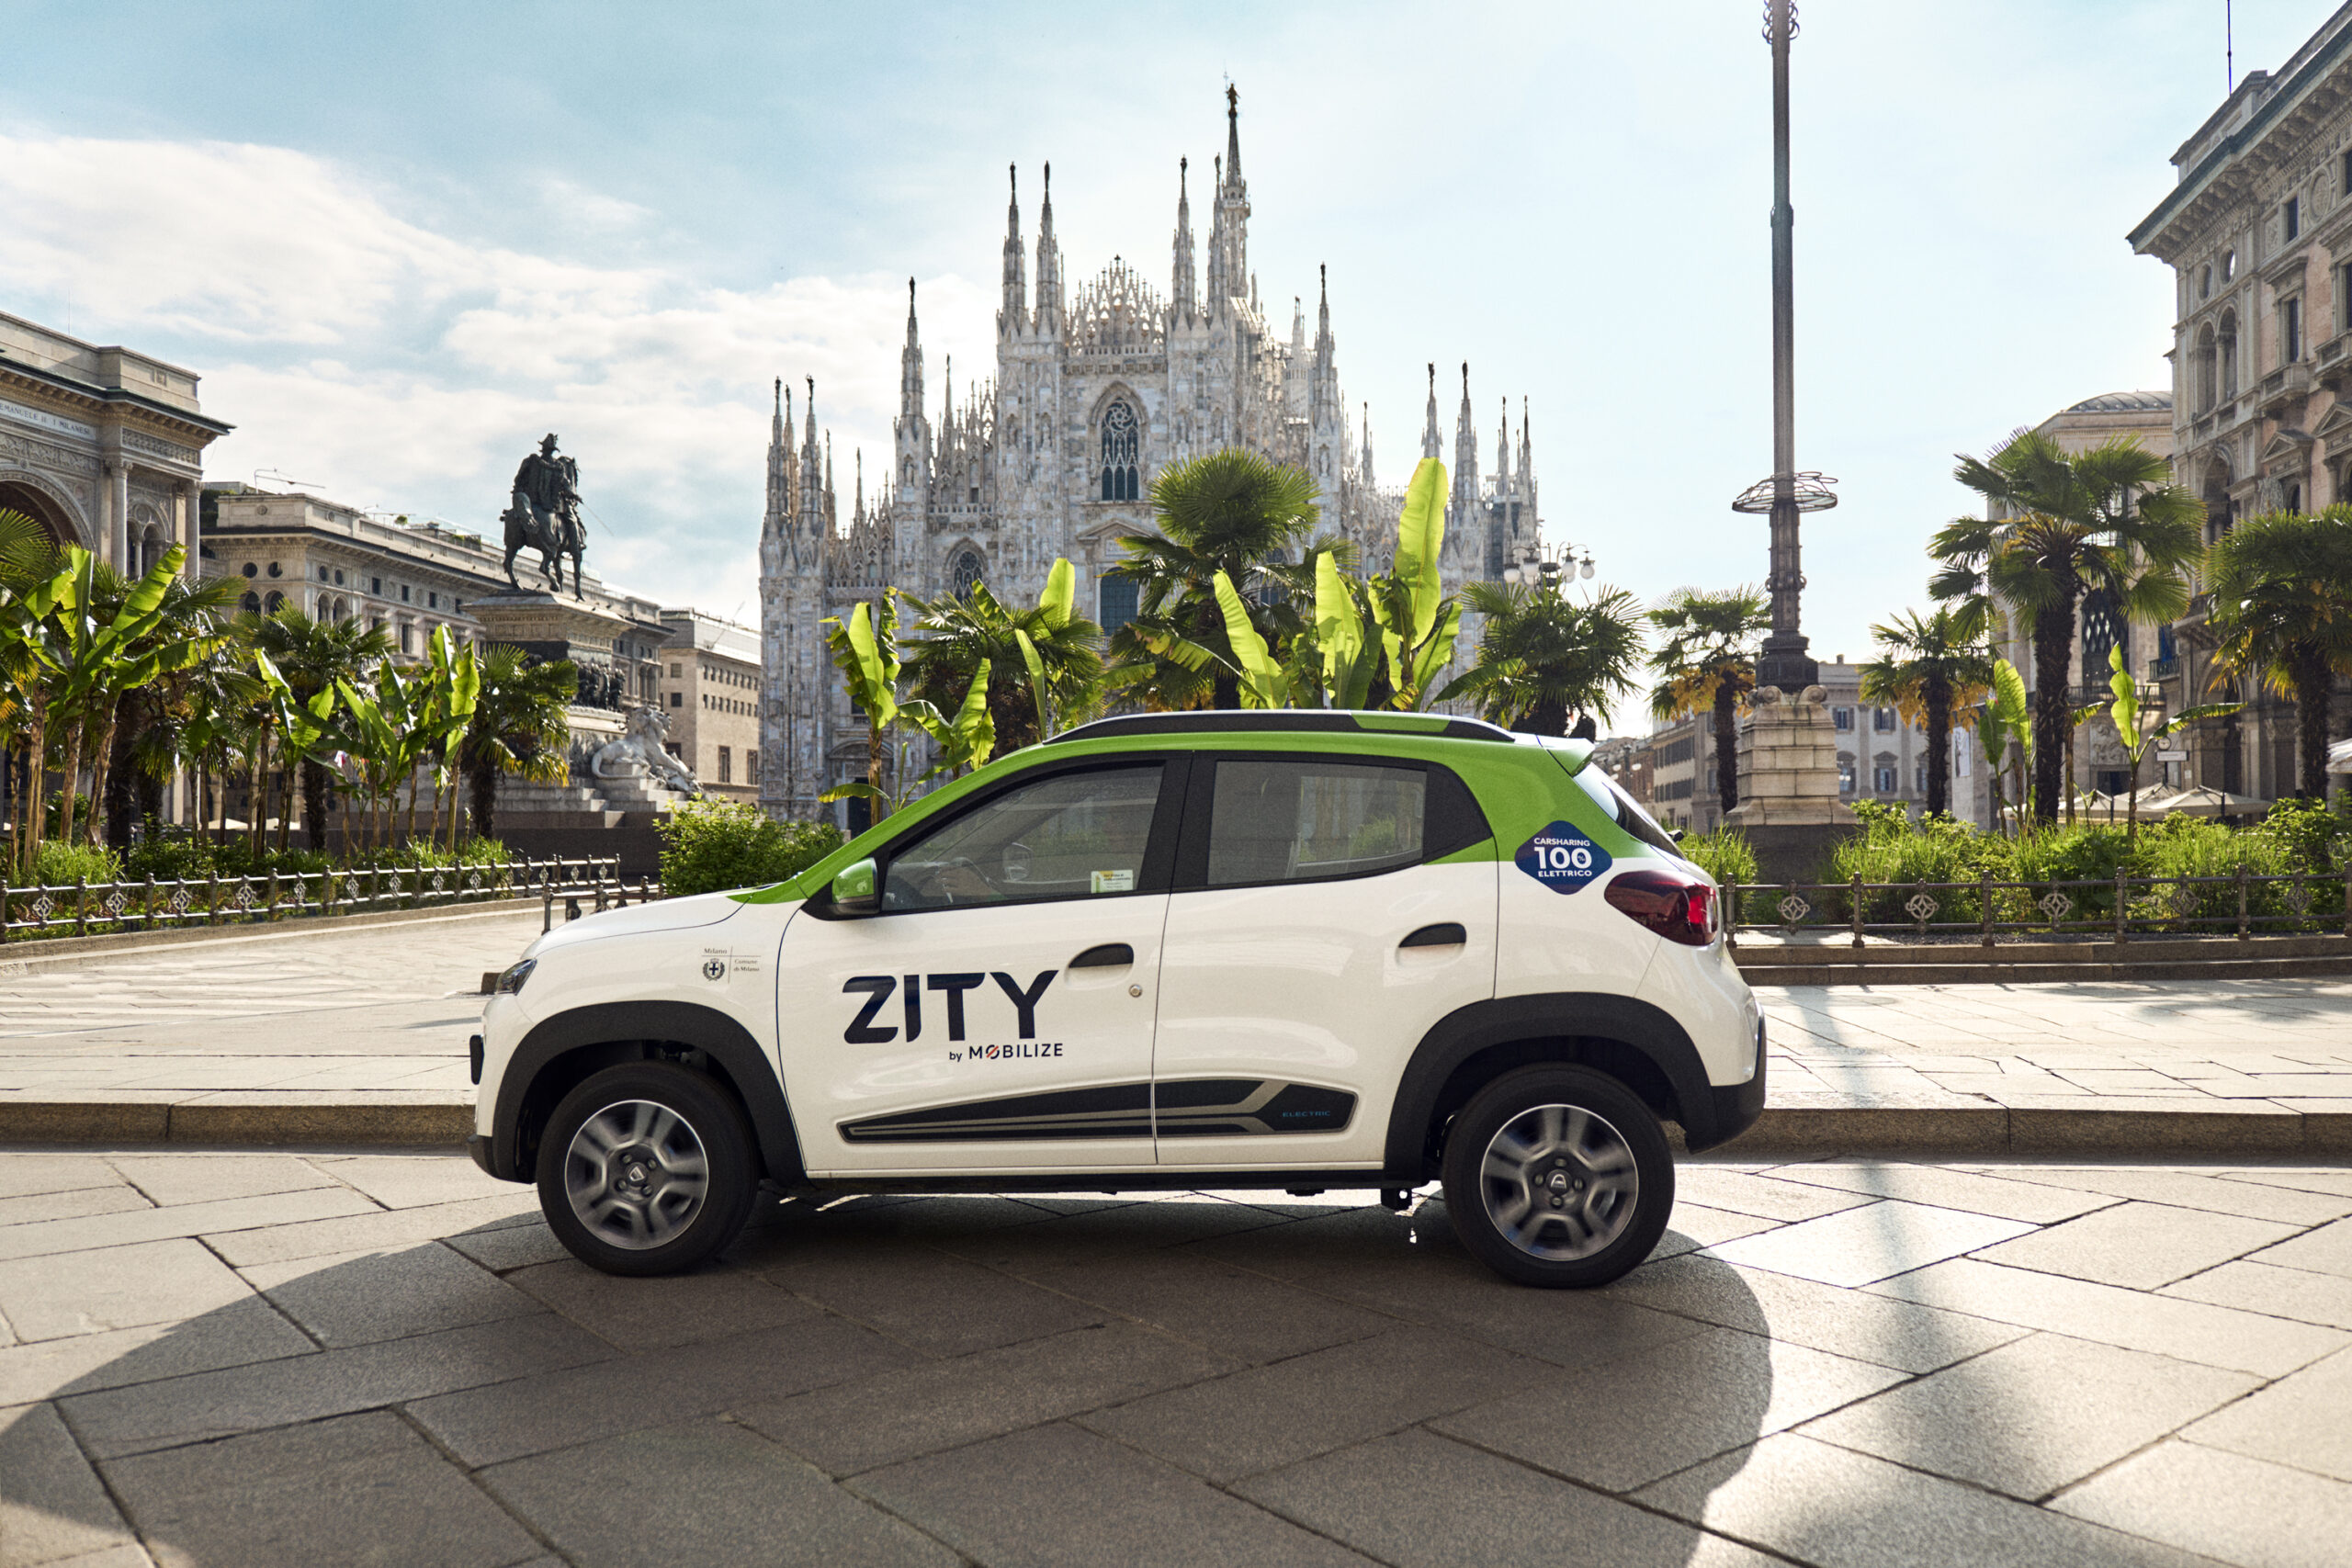 Vugo to bring advertising to Zity vehicles across Milan, Italy!